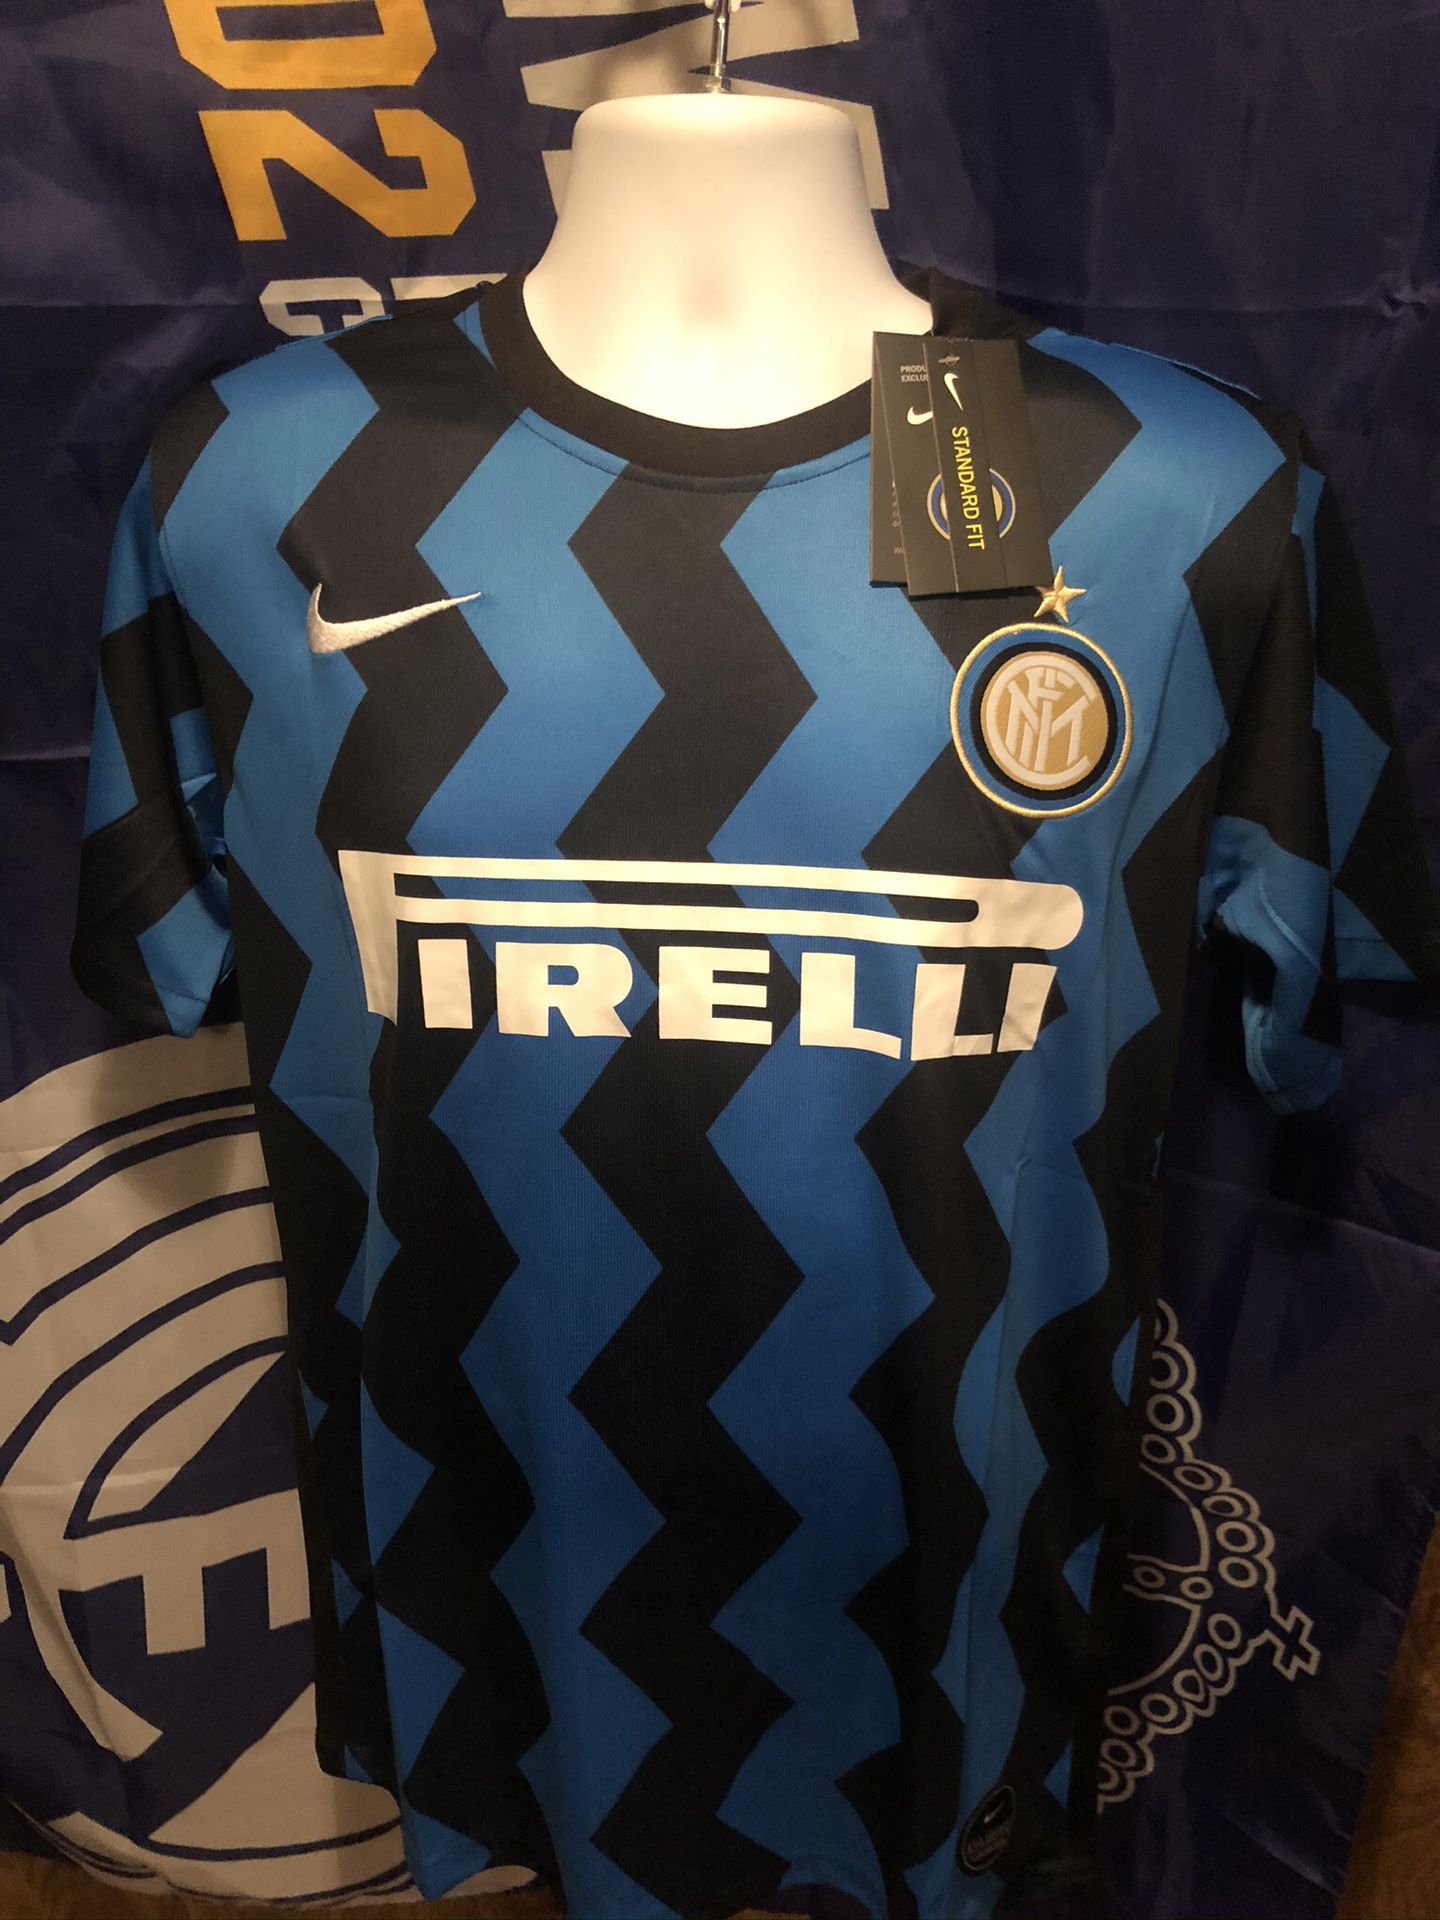 Inter Milan home jersey brand new